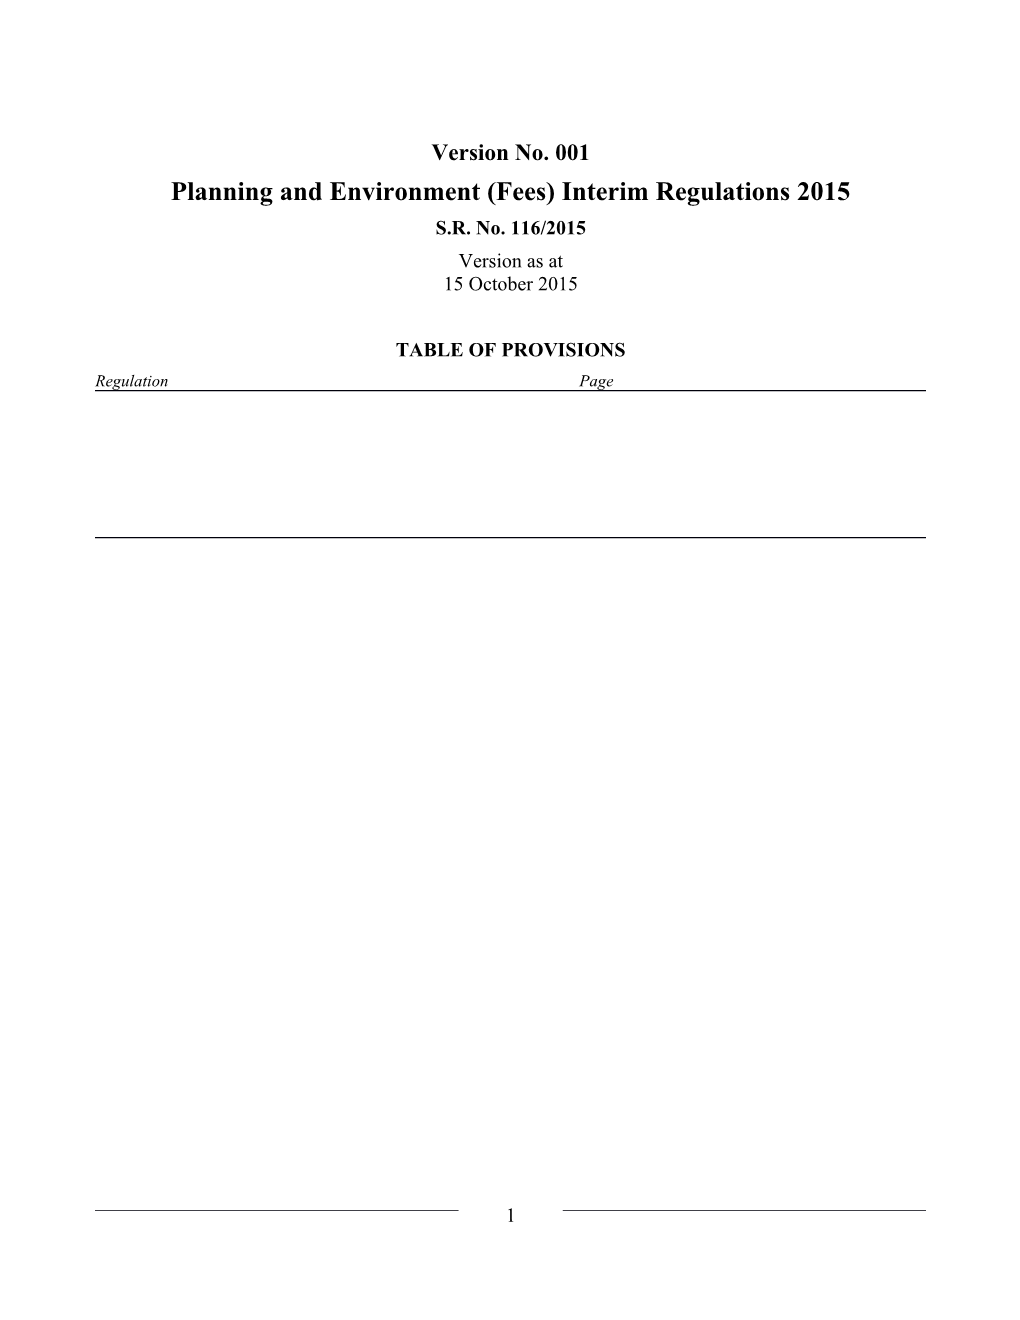 Planning and Environment (Fees) Interim Regulations 2015